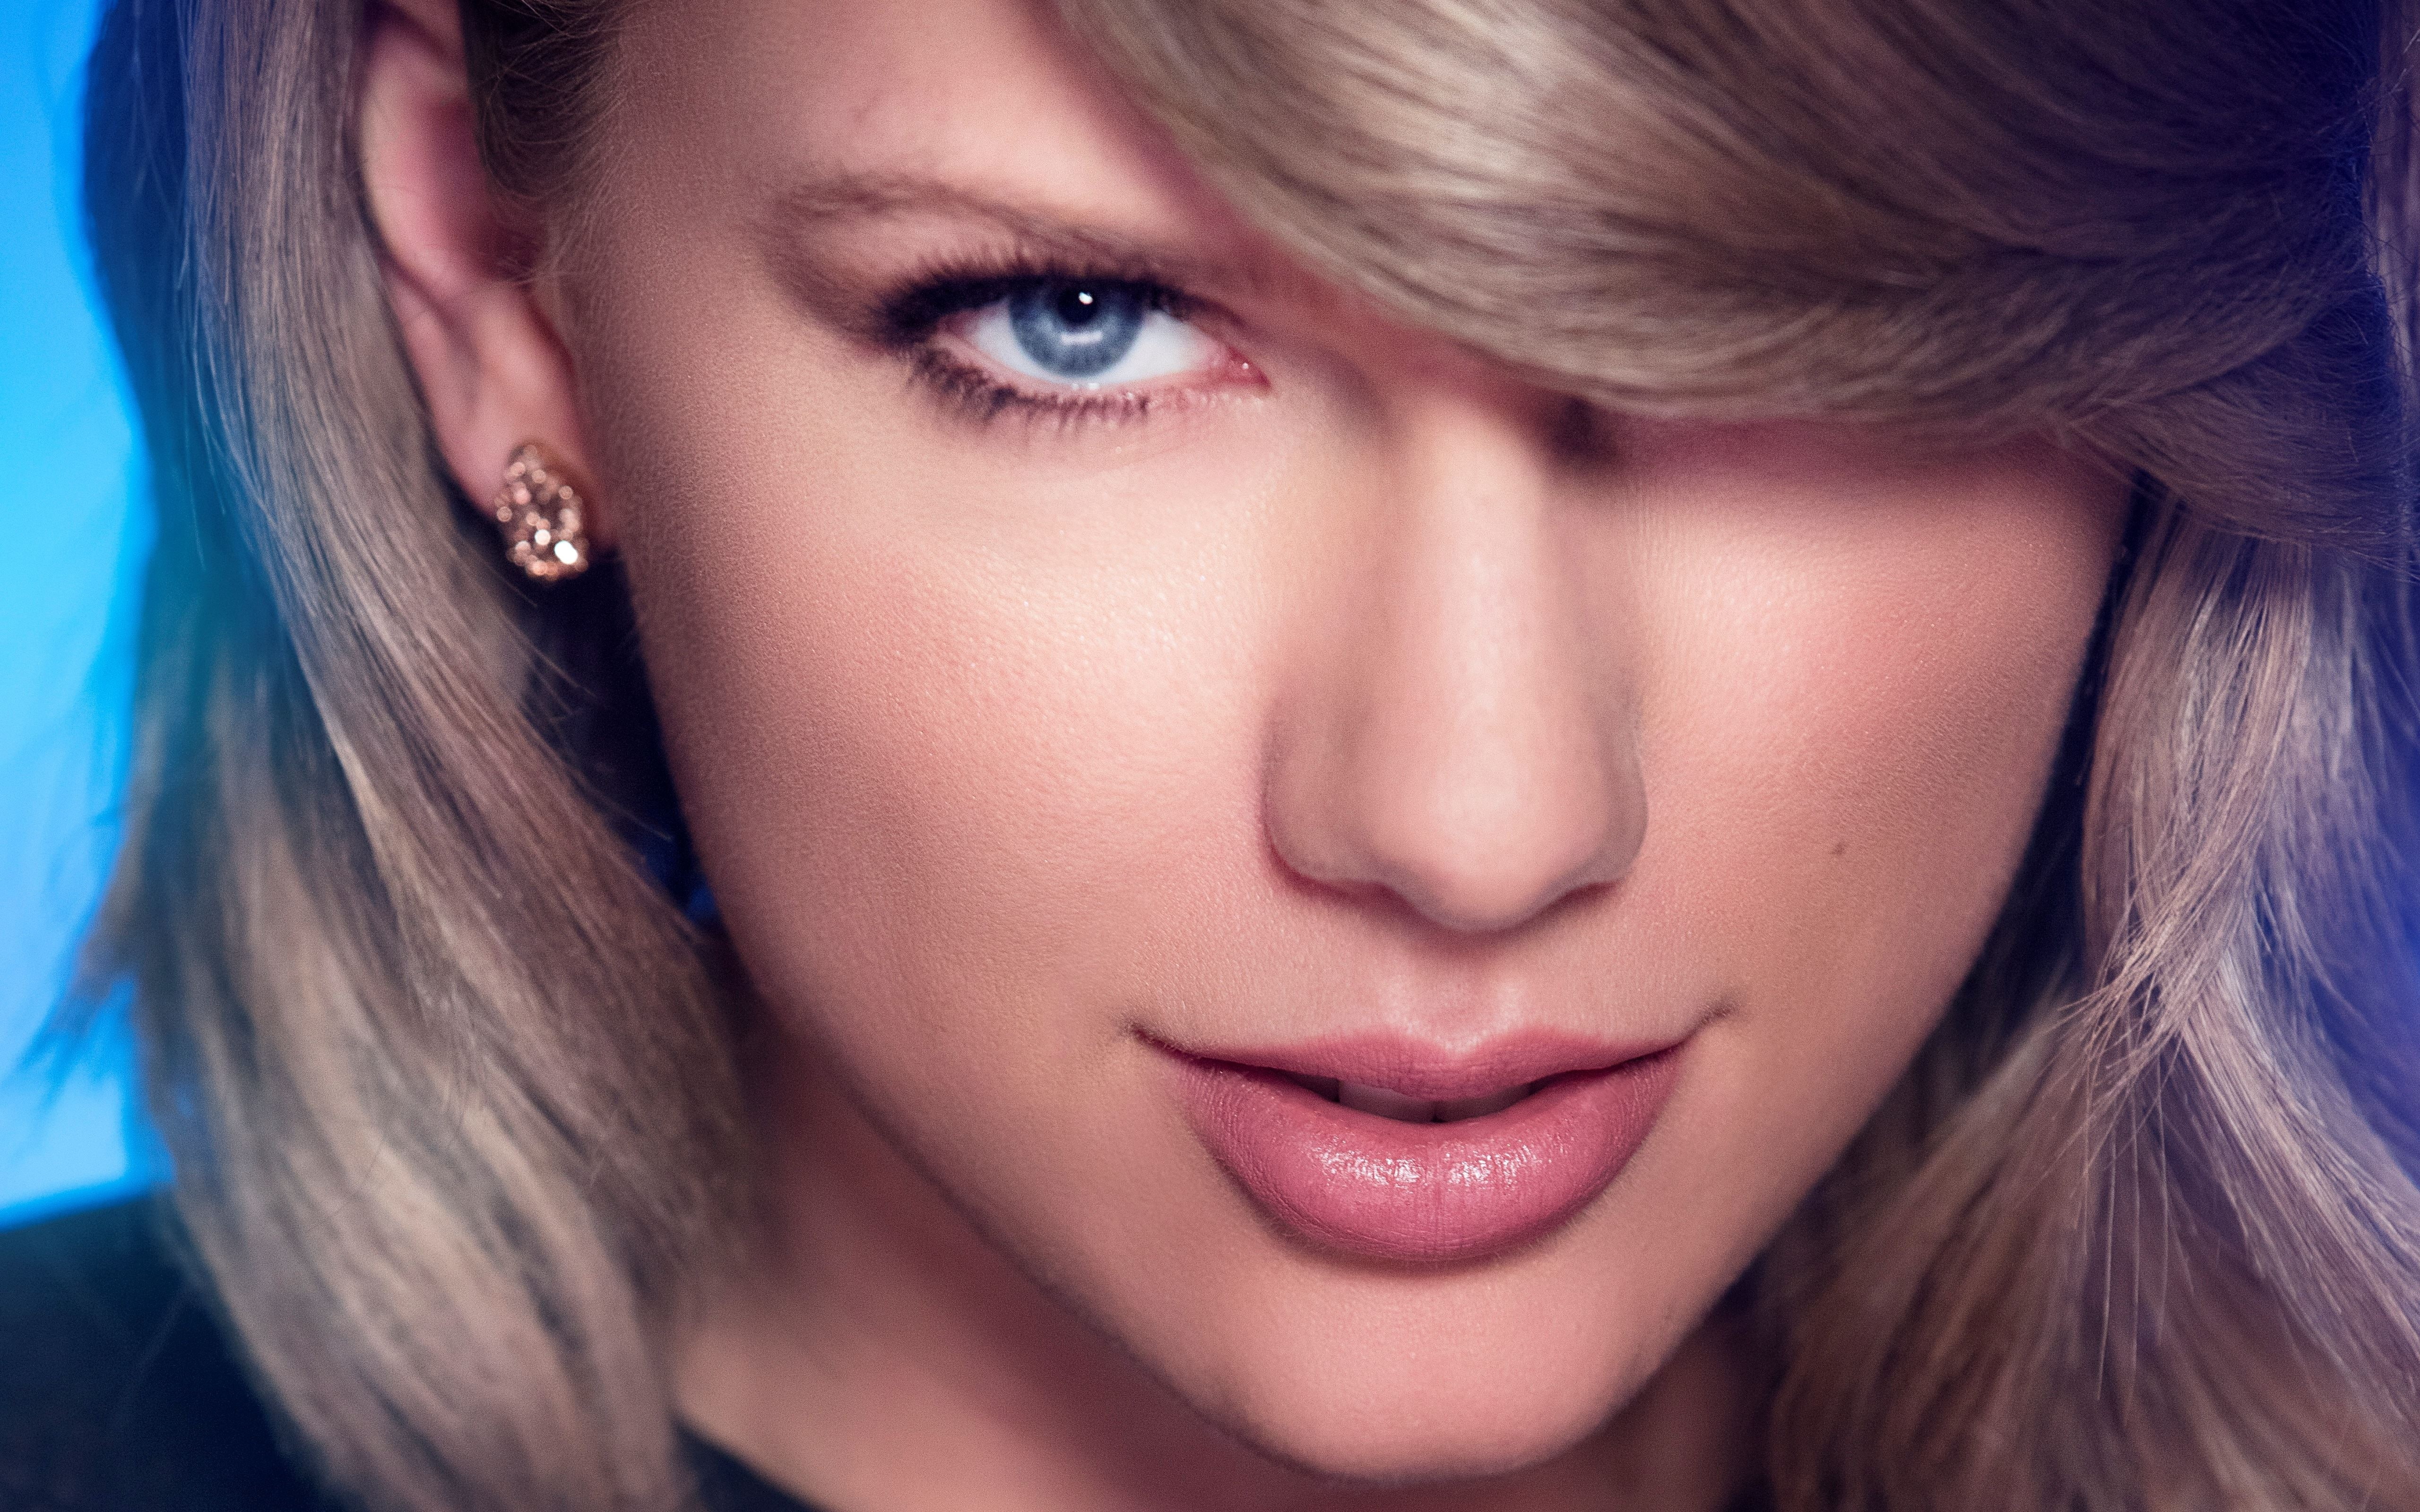 taylor swift, close-up, face, blue eyes, pink lipstick, singer